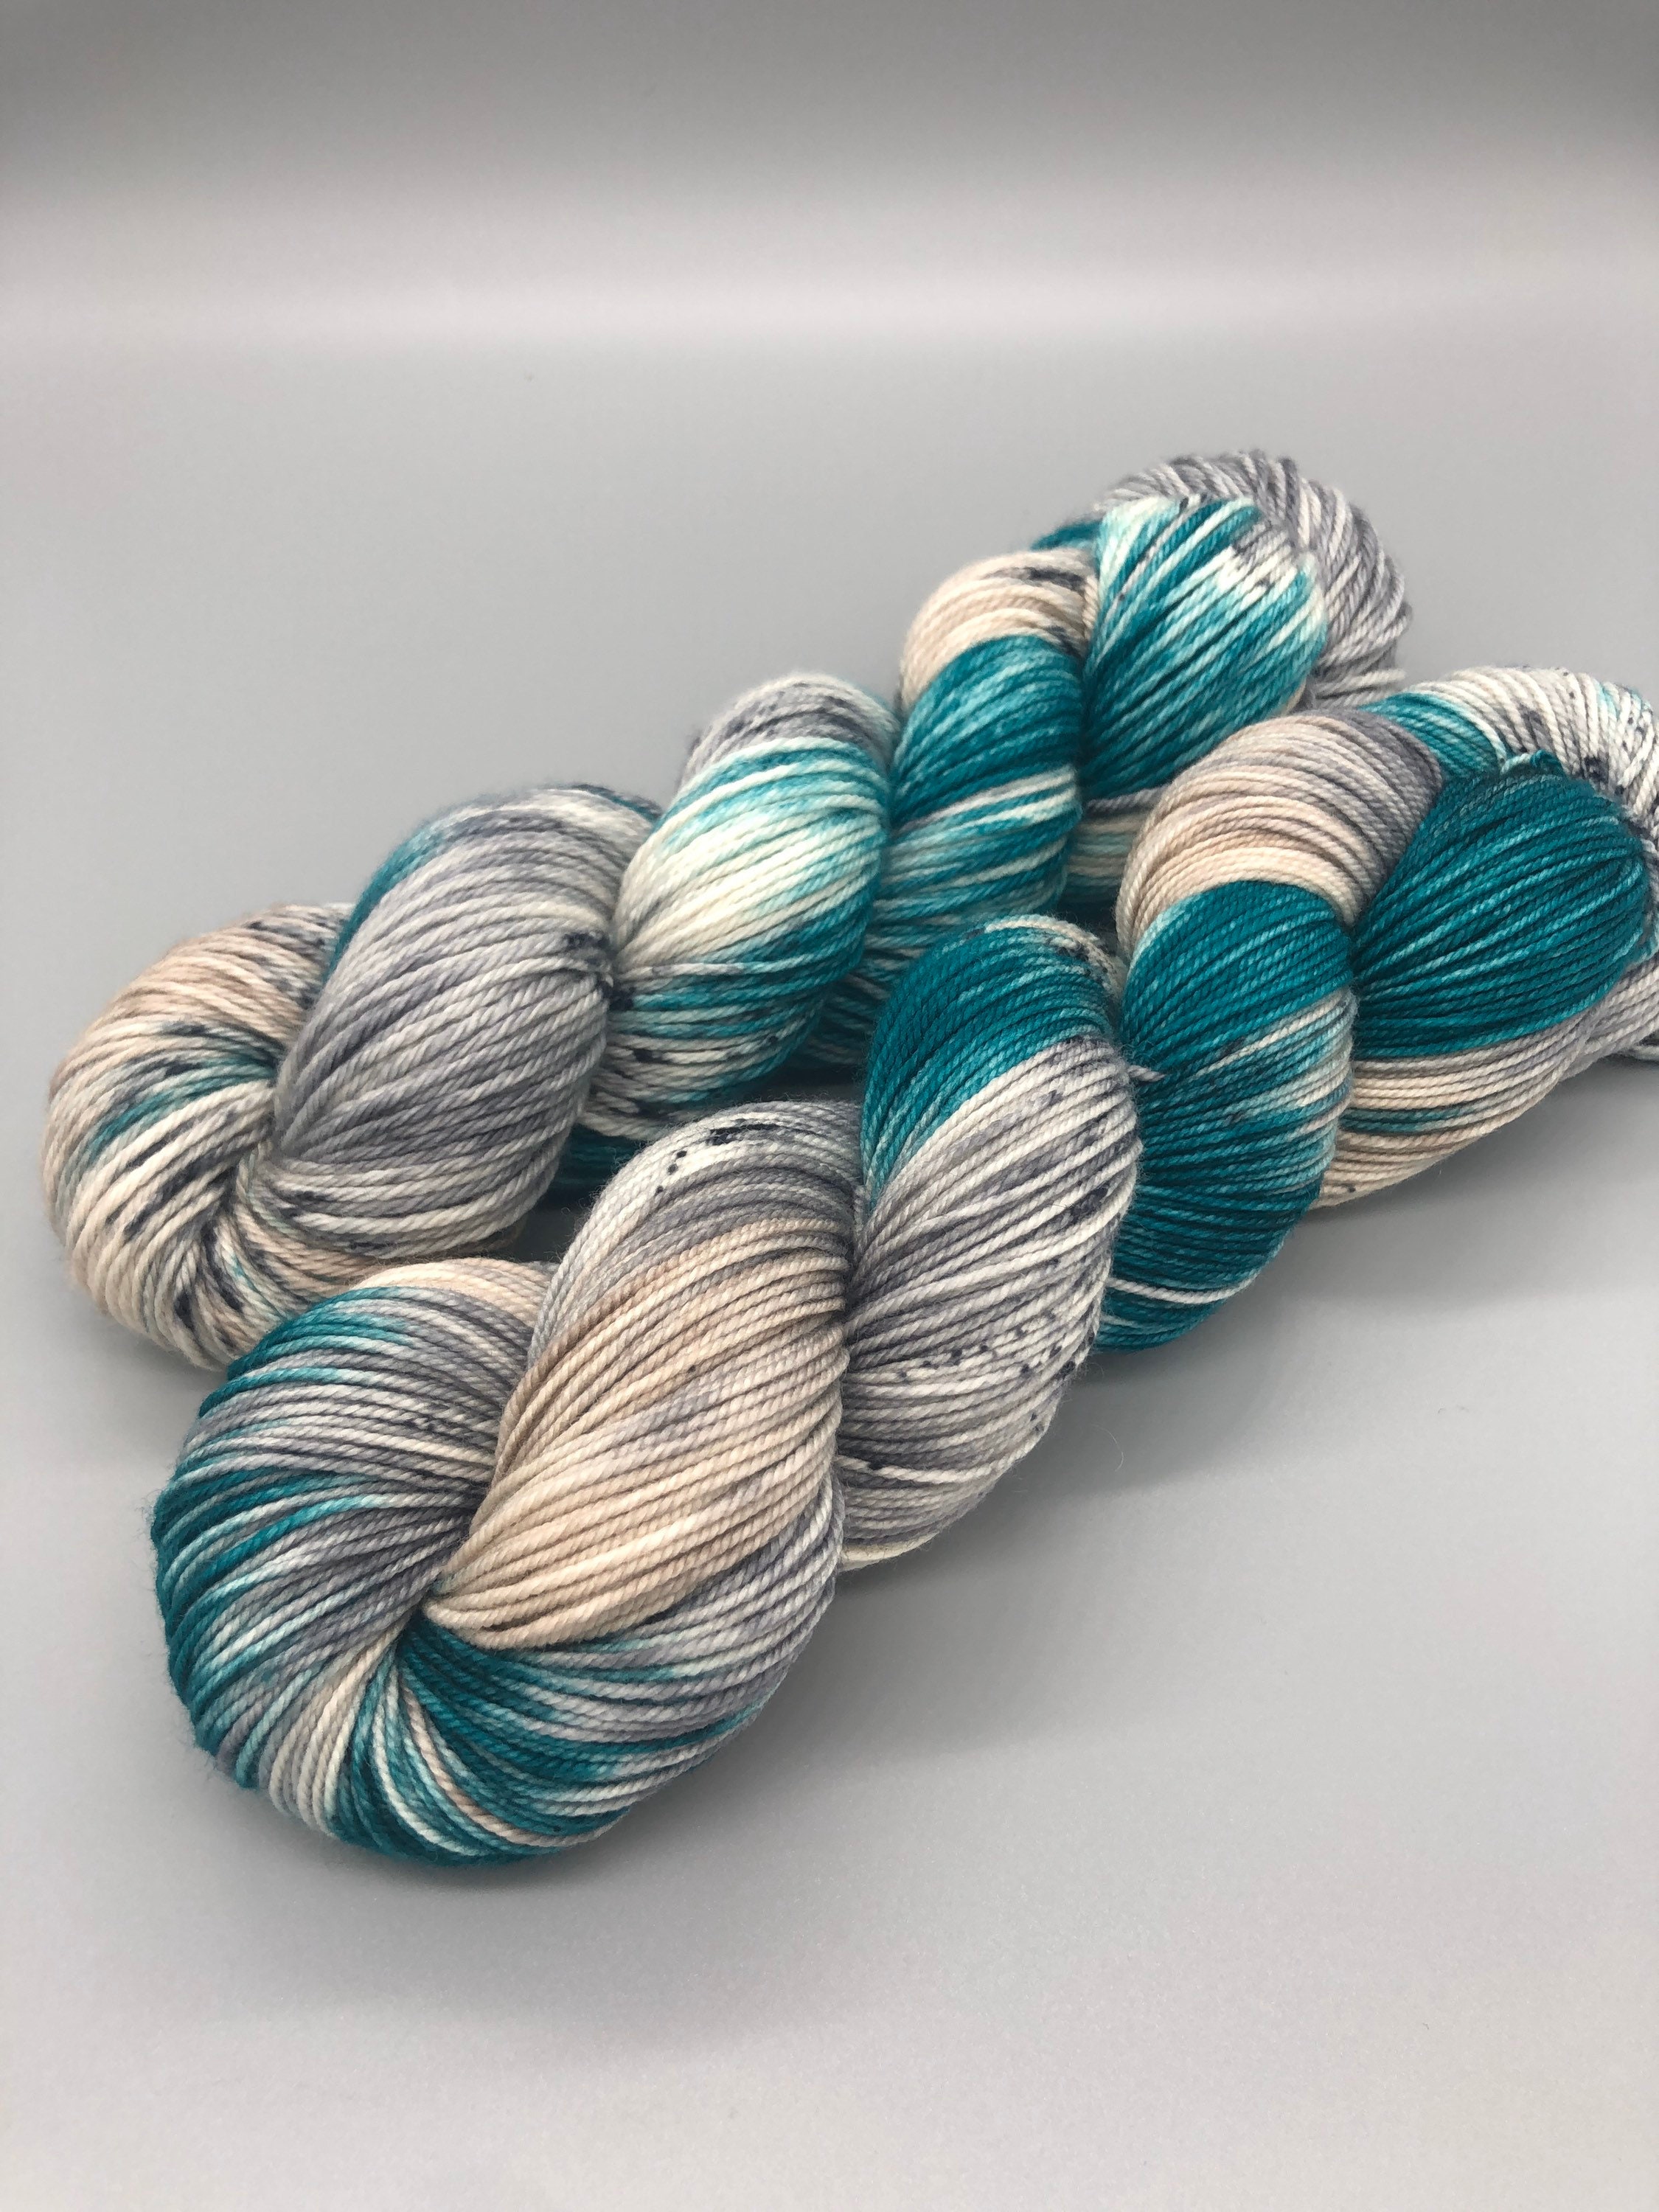 Arctic - Hand dyed yarn - teal blue grey gray